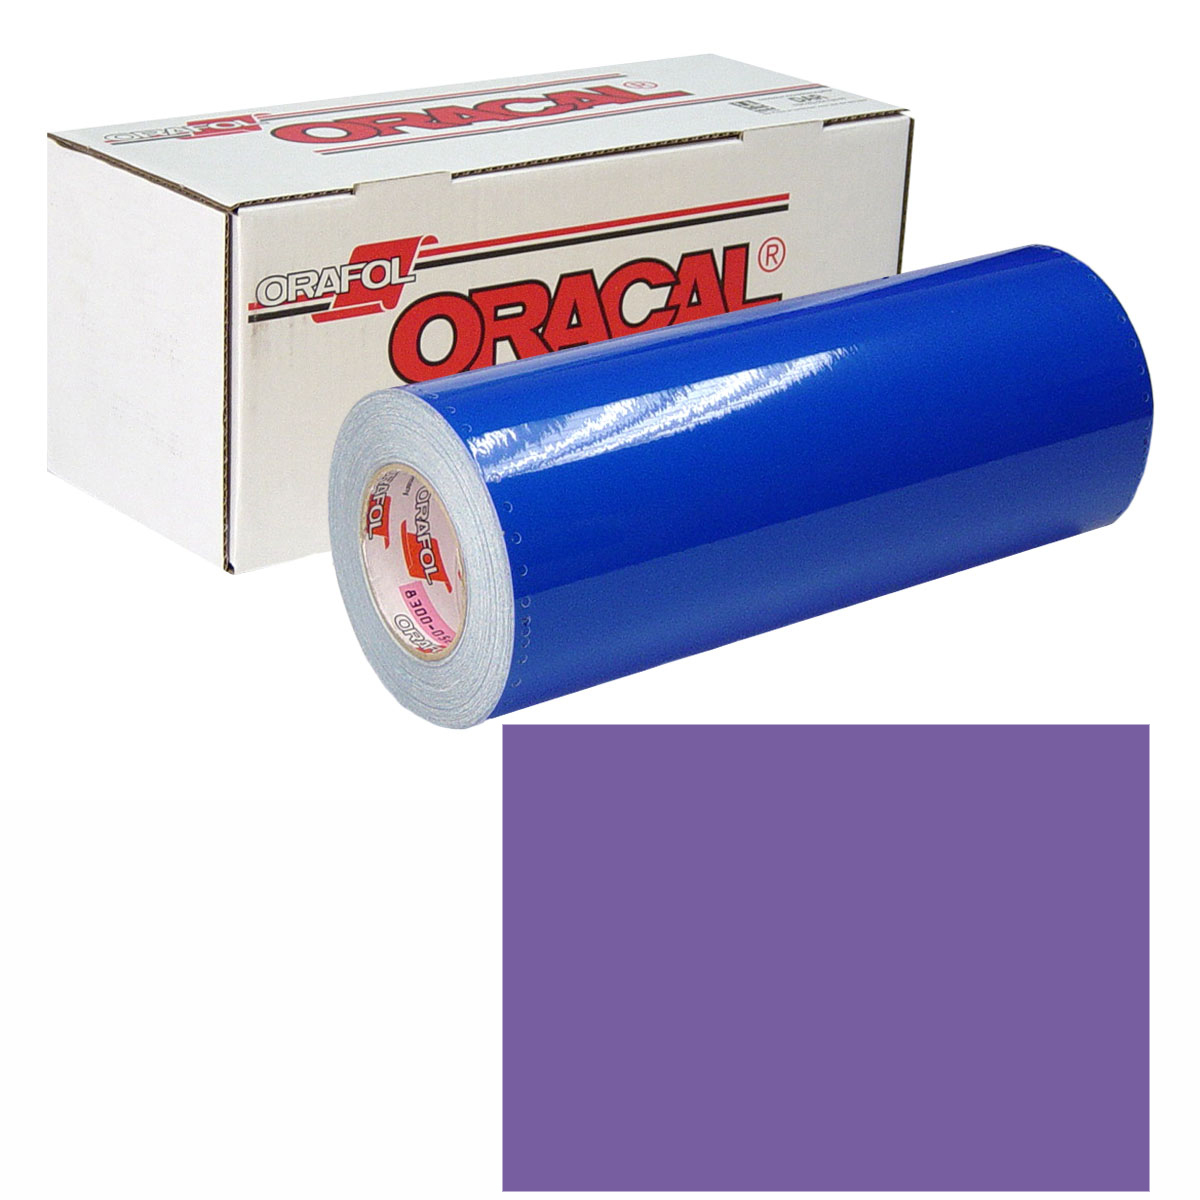 ORACAL 631 30in X 10yd 043 Lavender